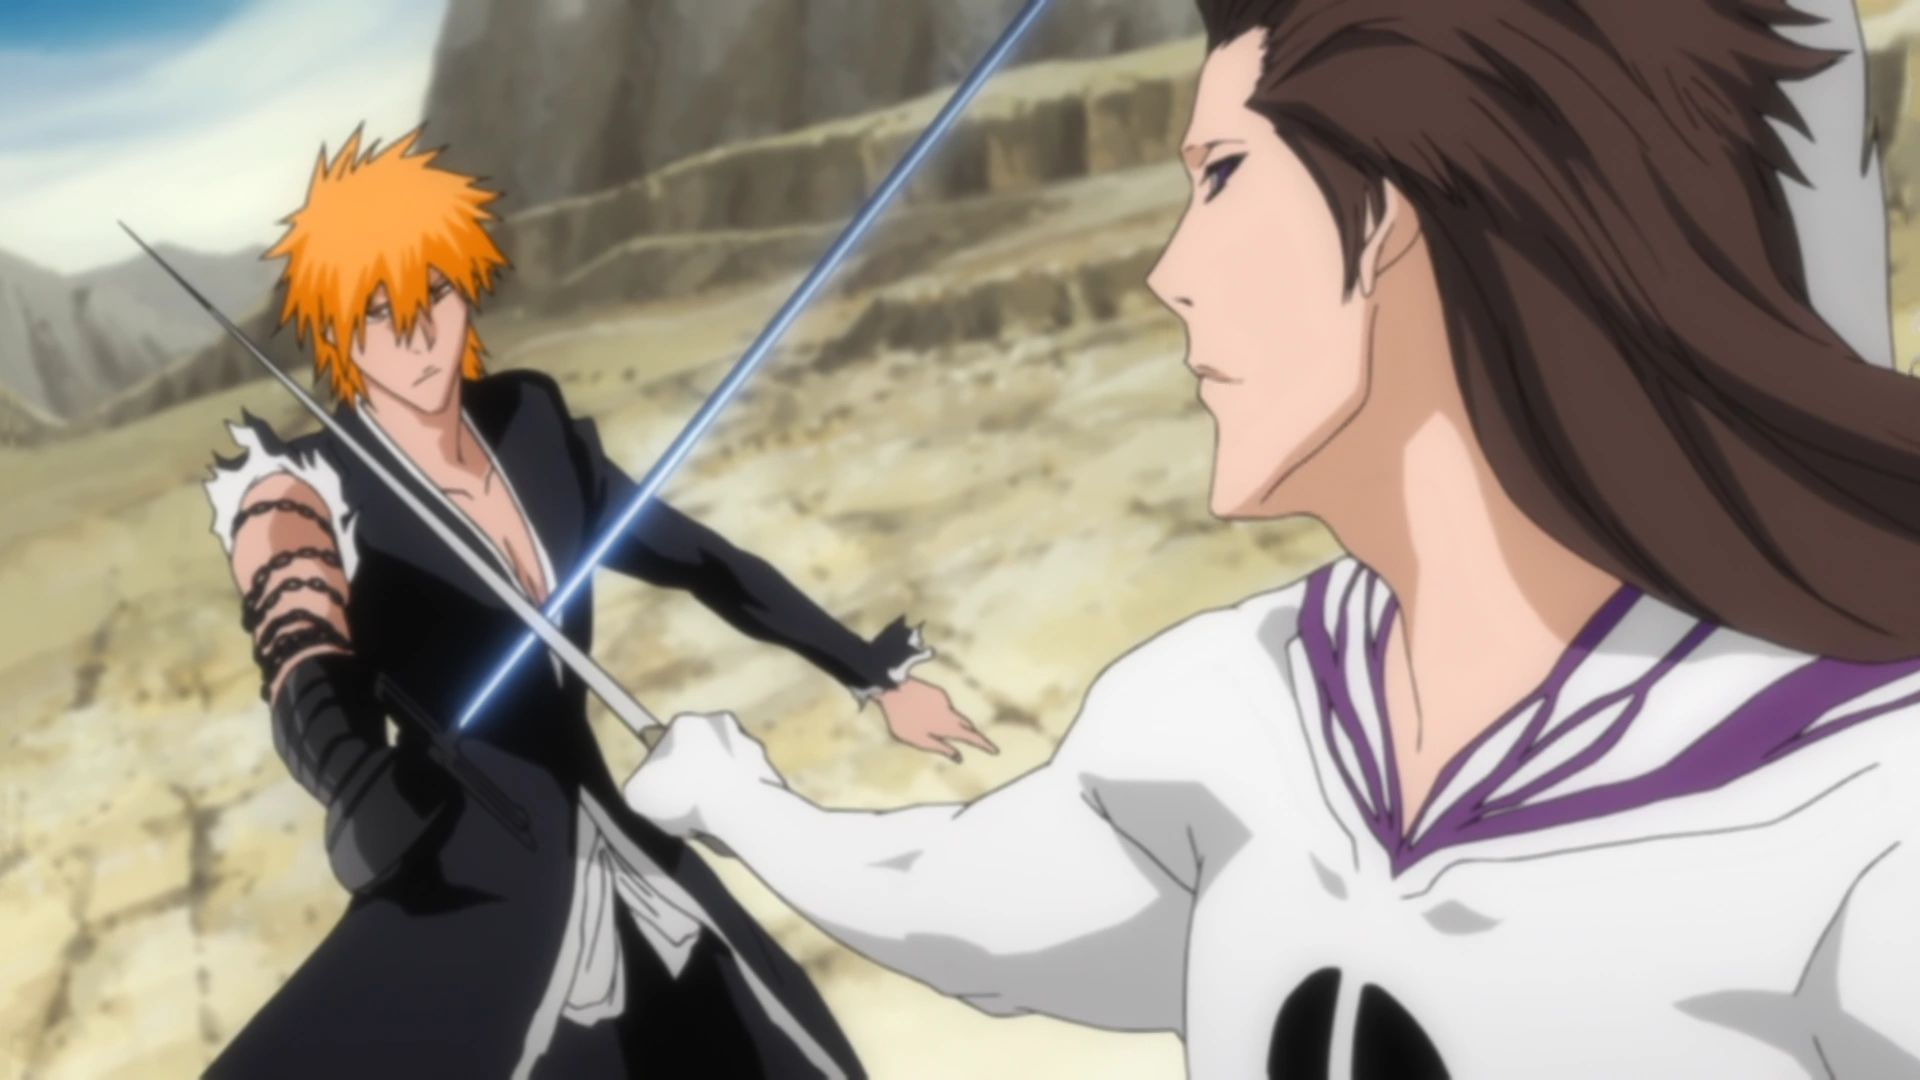 Ichigo vs Aizen in Bleach (Image via Studio Pierrot)